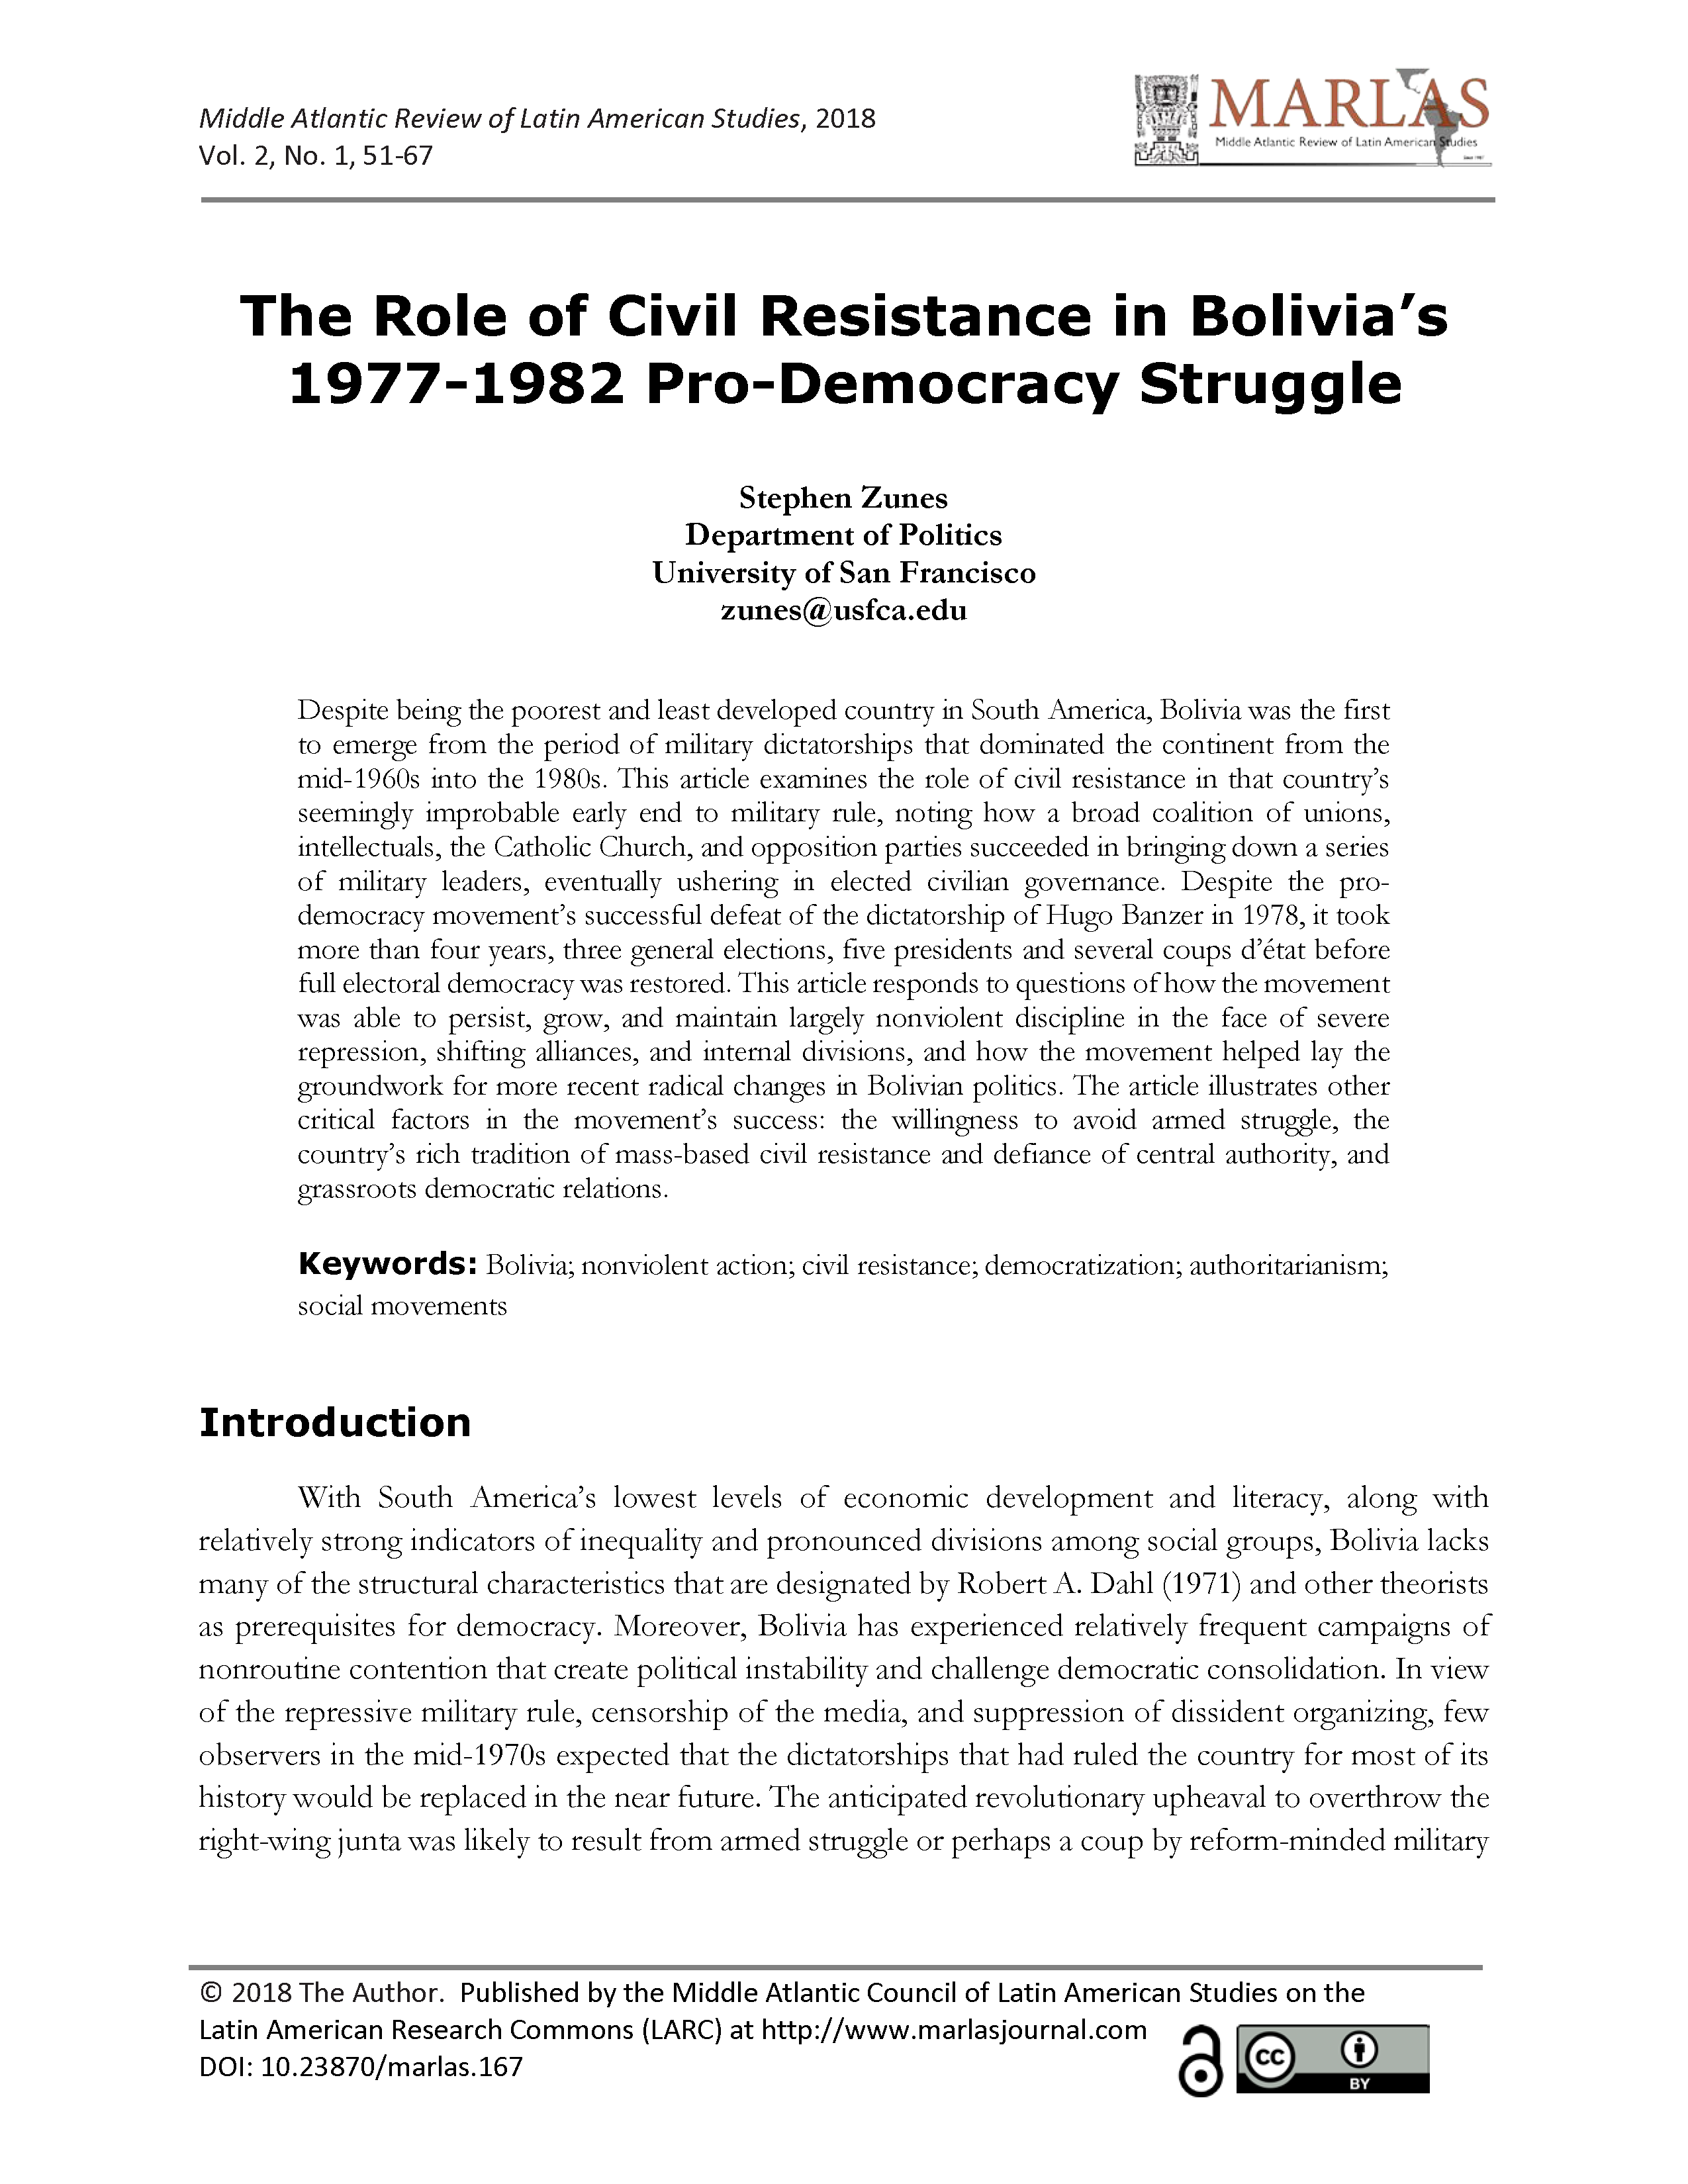 The Role of Civil Resistance in Bolivia’s 1977-1982 Pro-Democracy Struggle